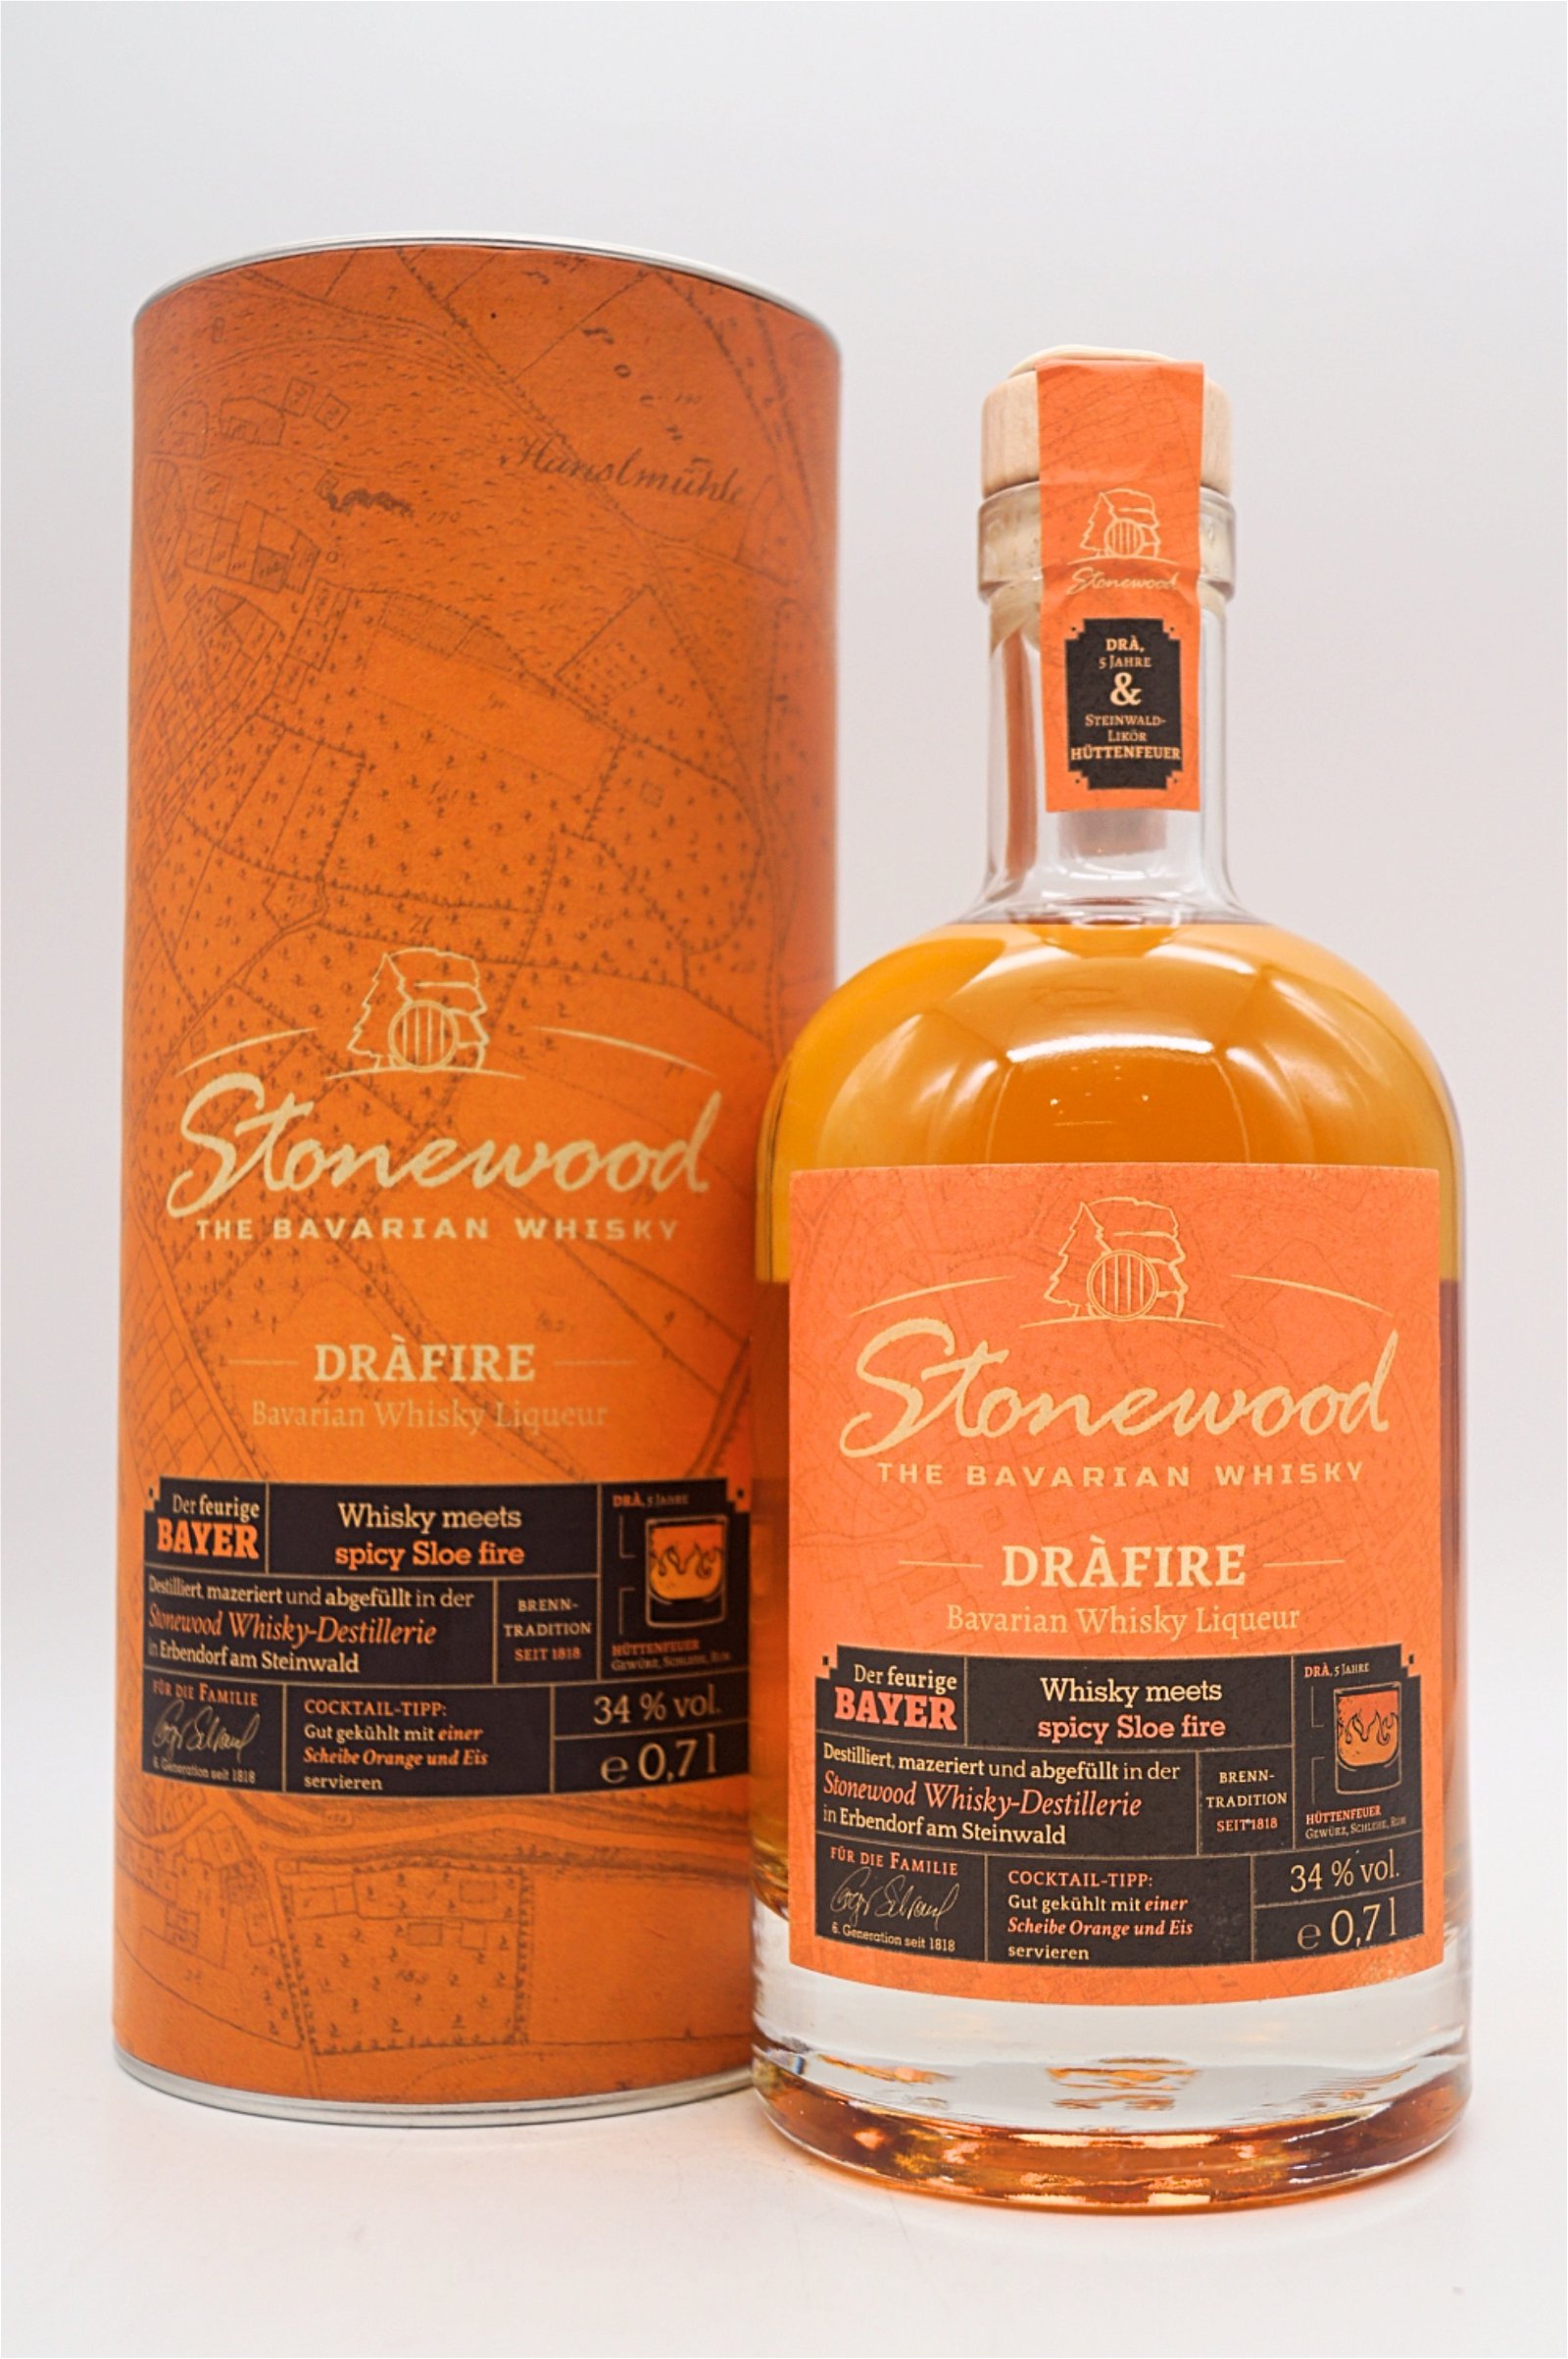 Schraml Stonewood Drafire Bavarian Whisky Likör